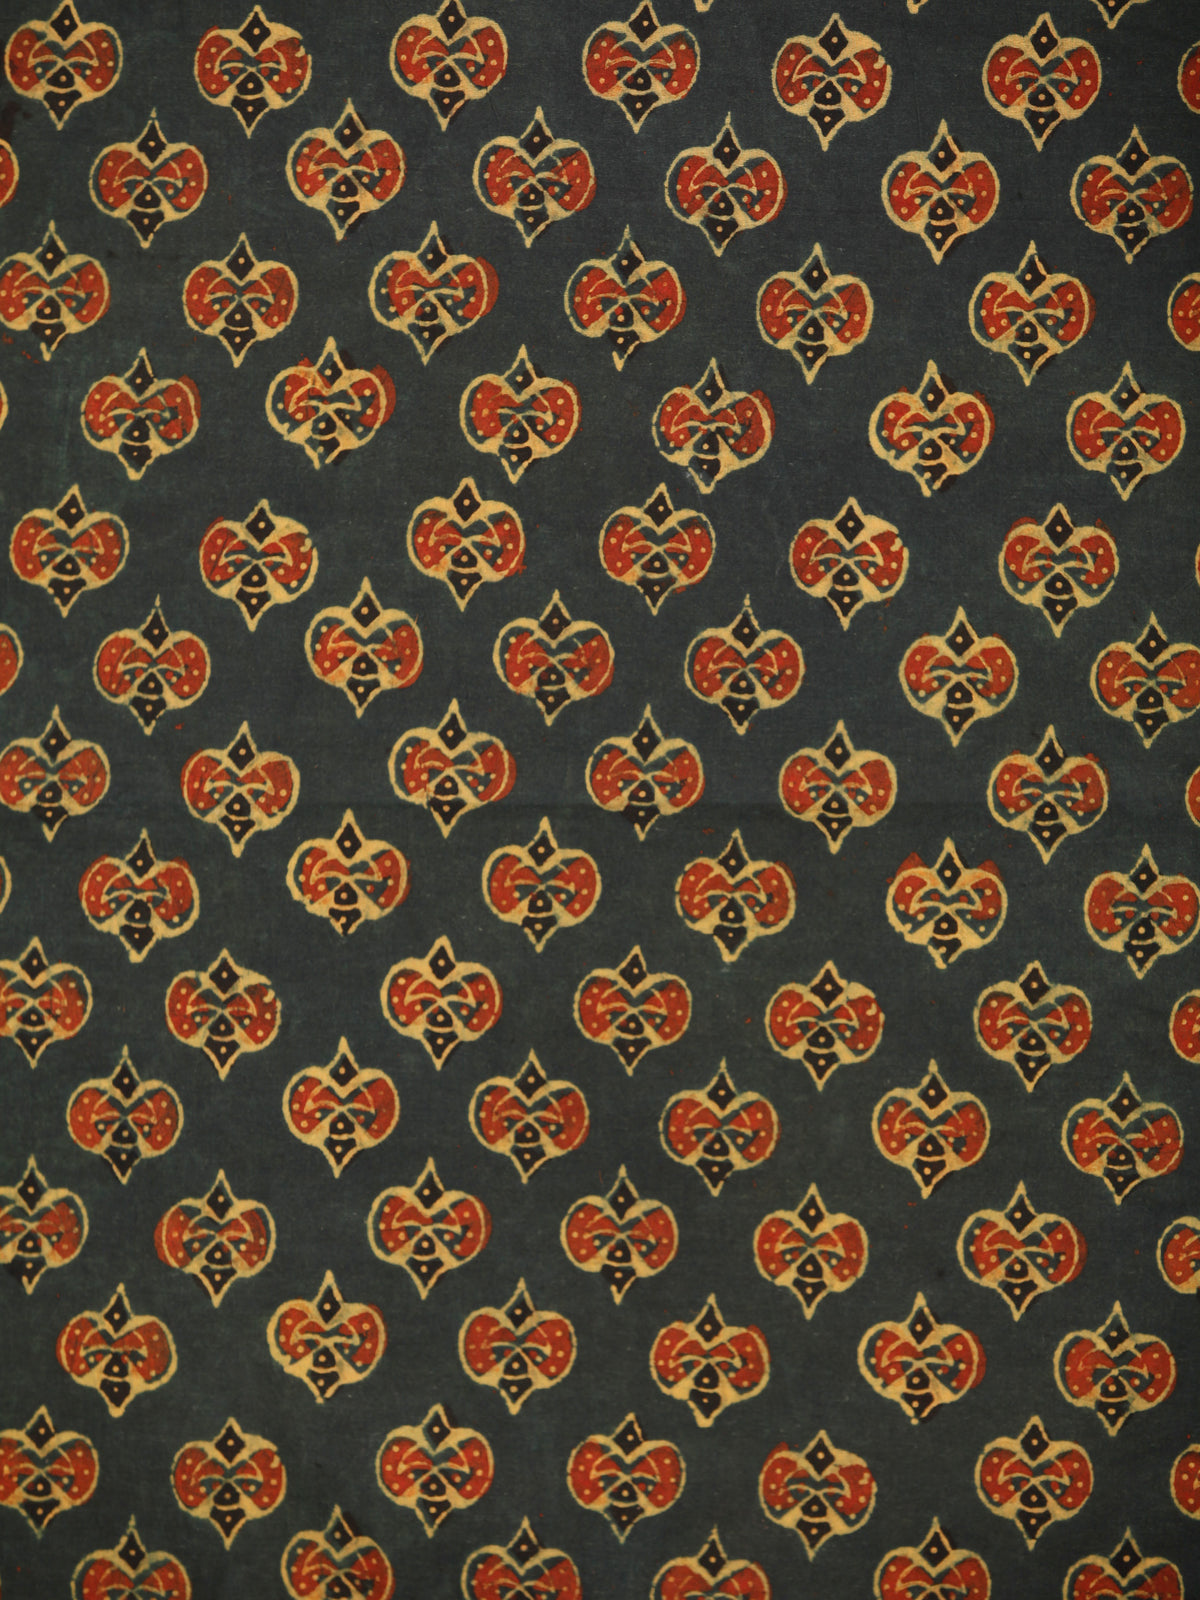 Green Red Yellow Black Ajrakh Block Printed Cotton Fabric Per Meter - F003F1759